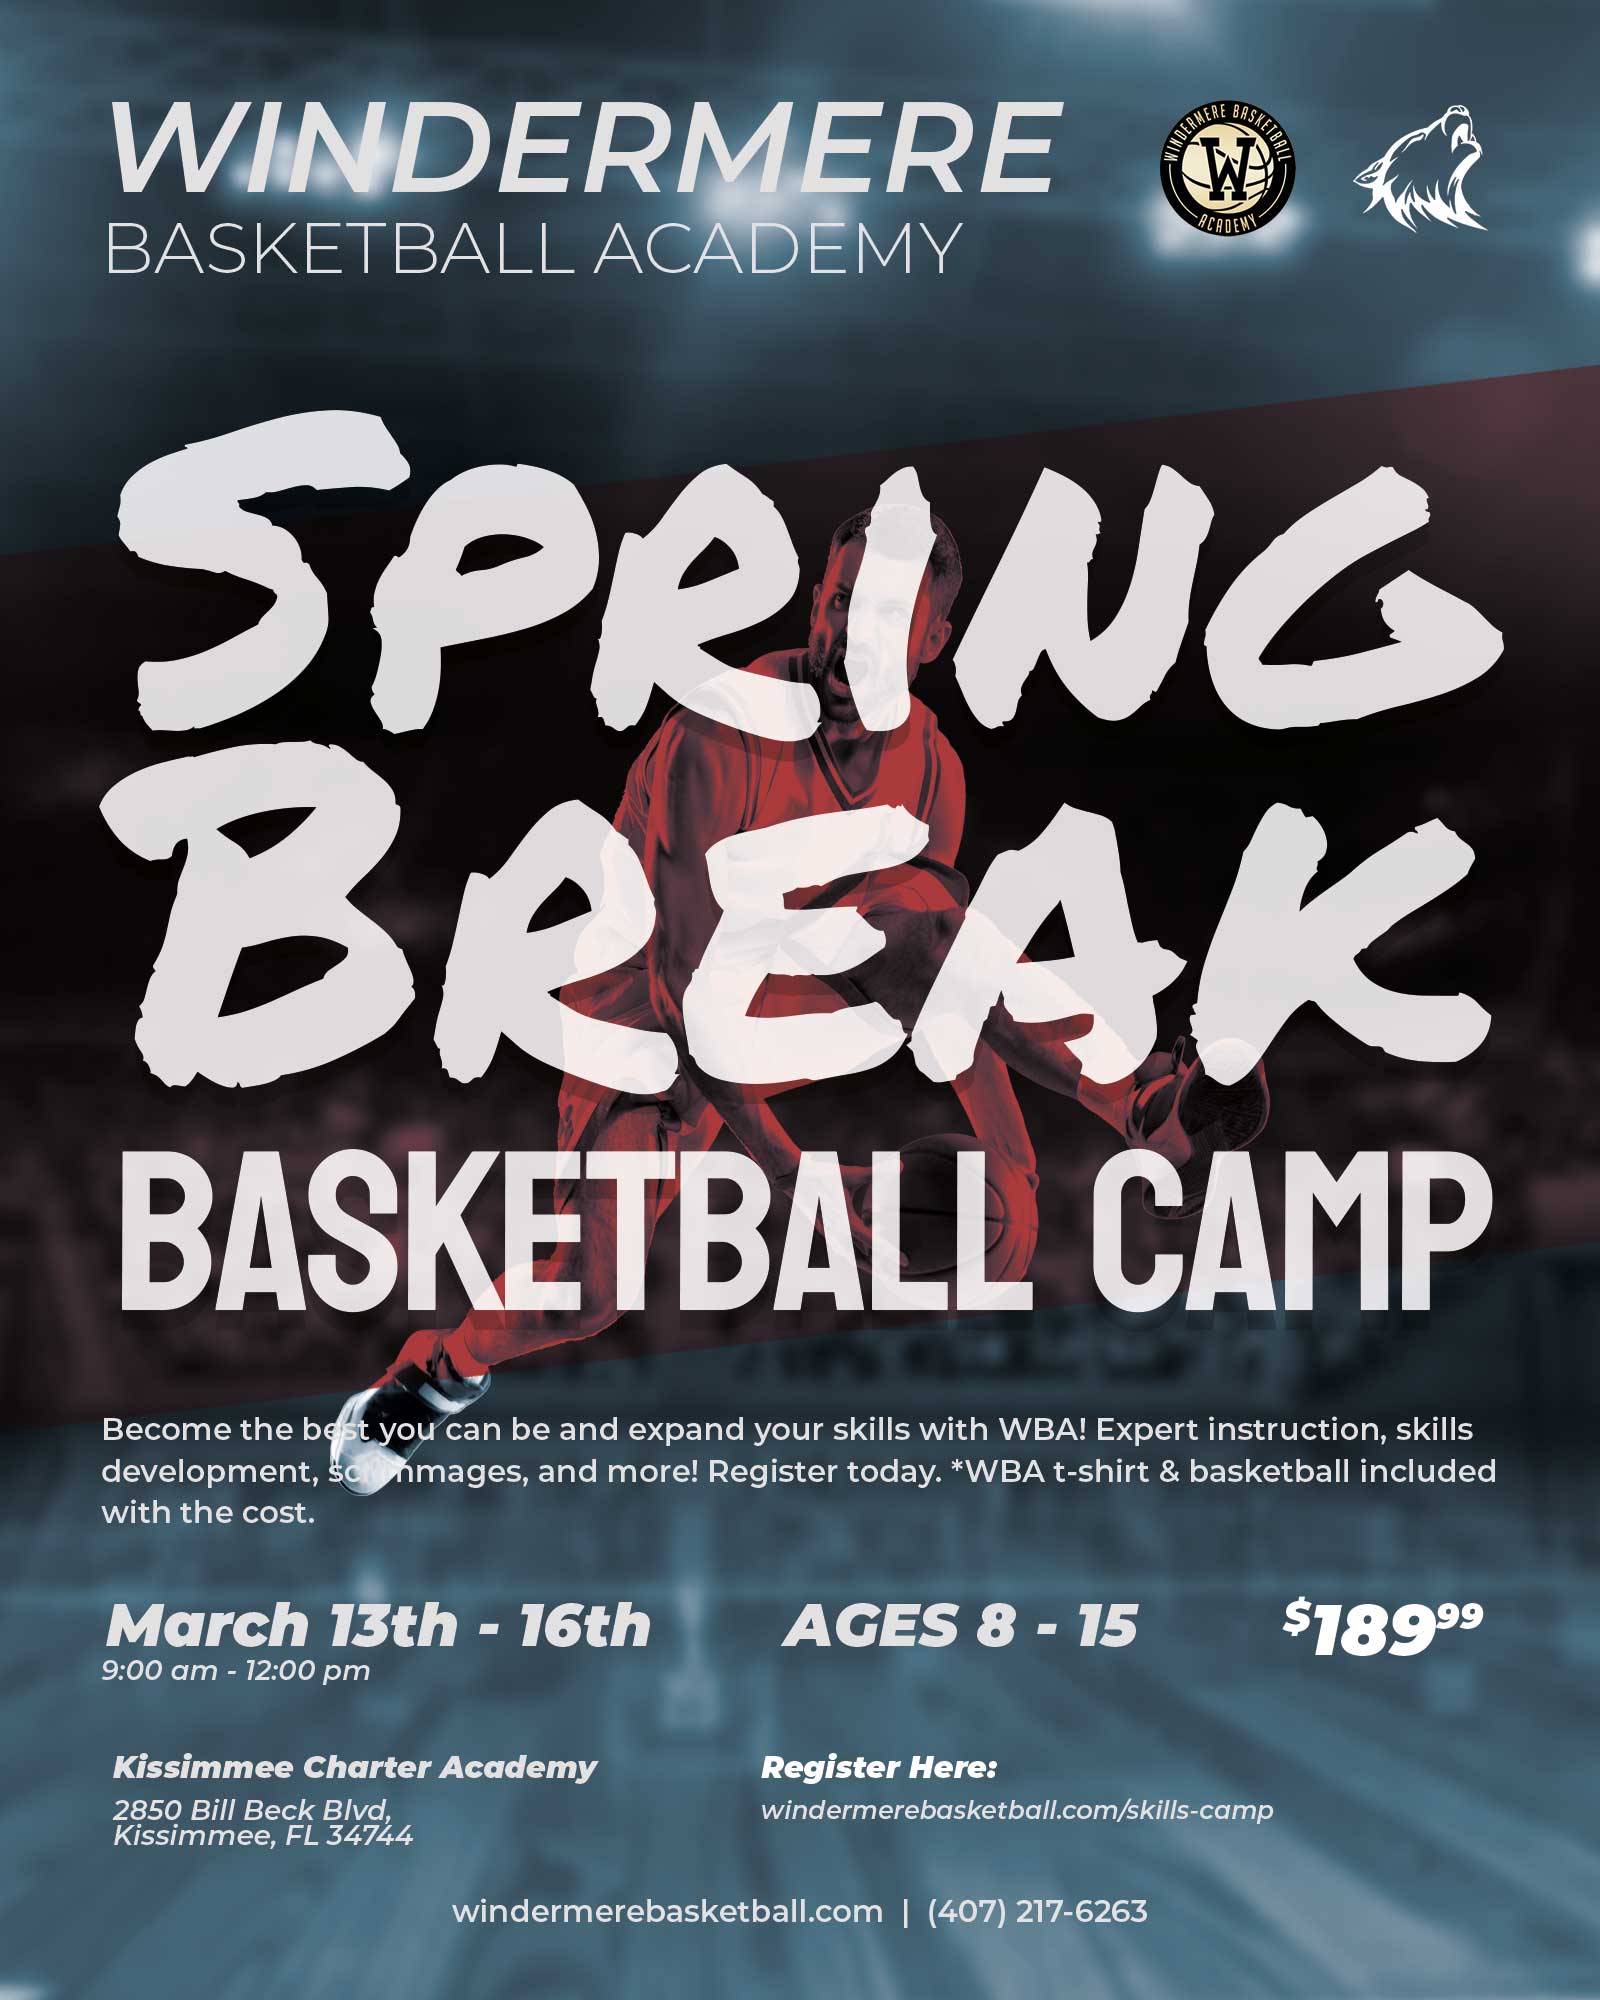 Windermere Basketball Academy Spring Break Camp Windermere Basketball